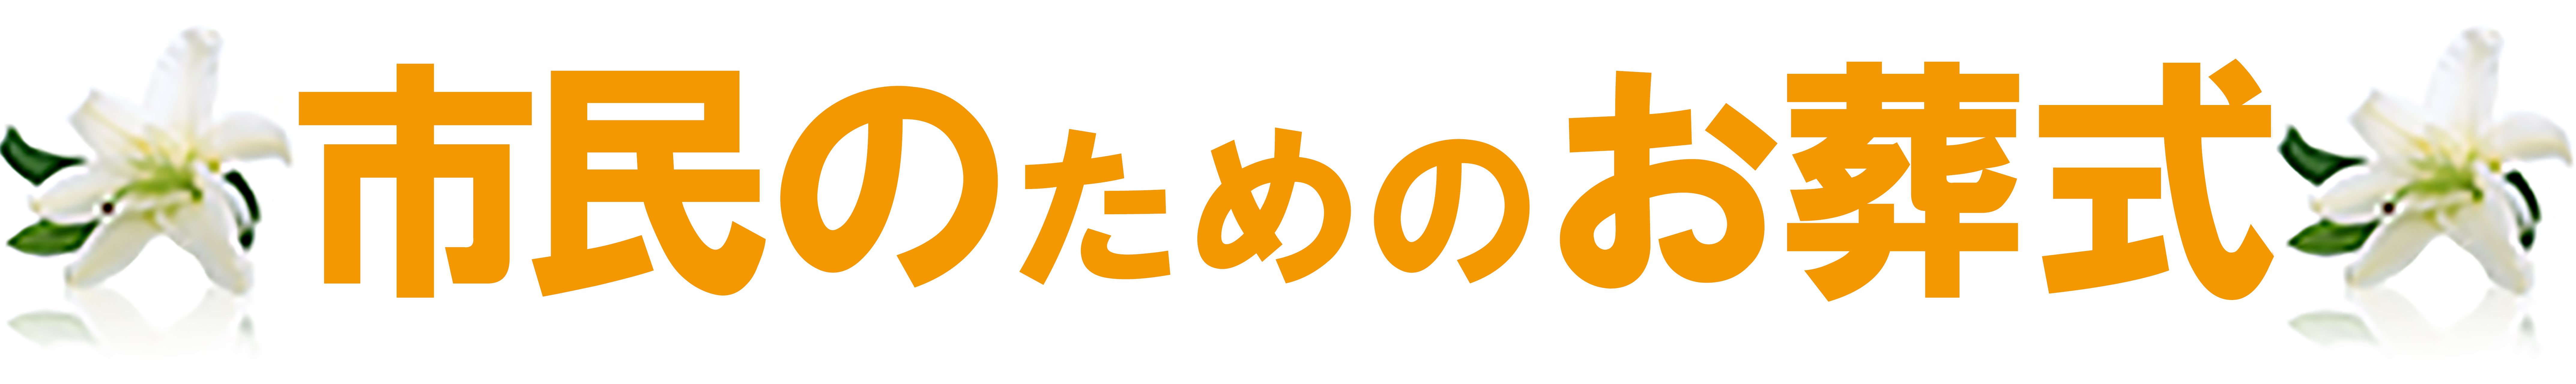 logo_20150521yamaguchi